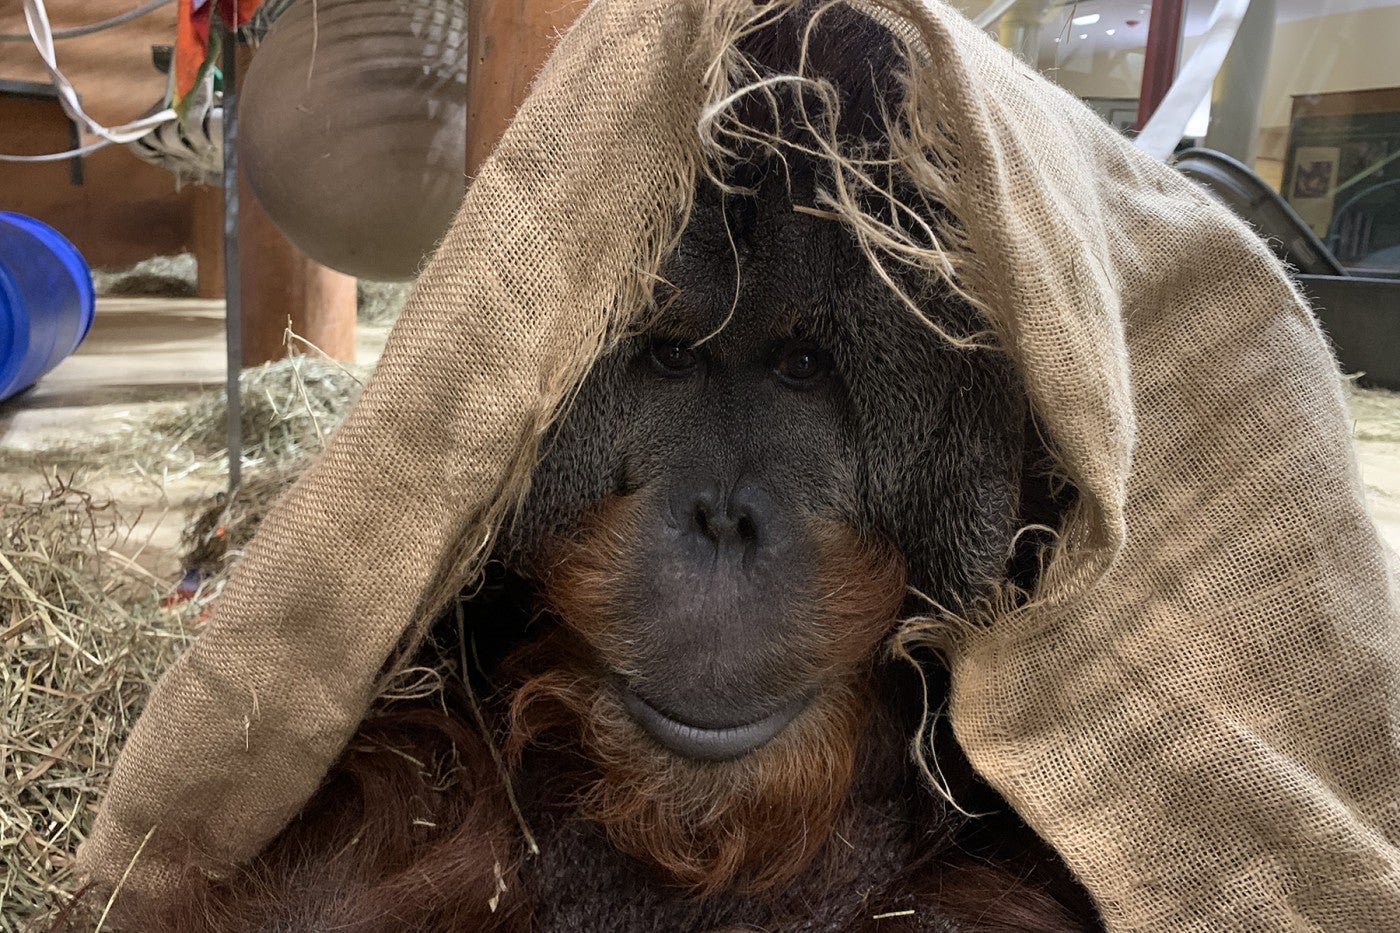 Orangutan Kiko is covered in a burlap blanket.